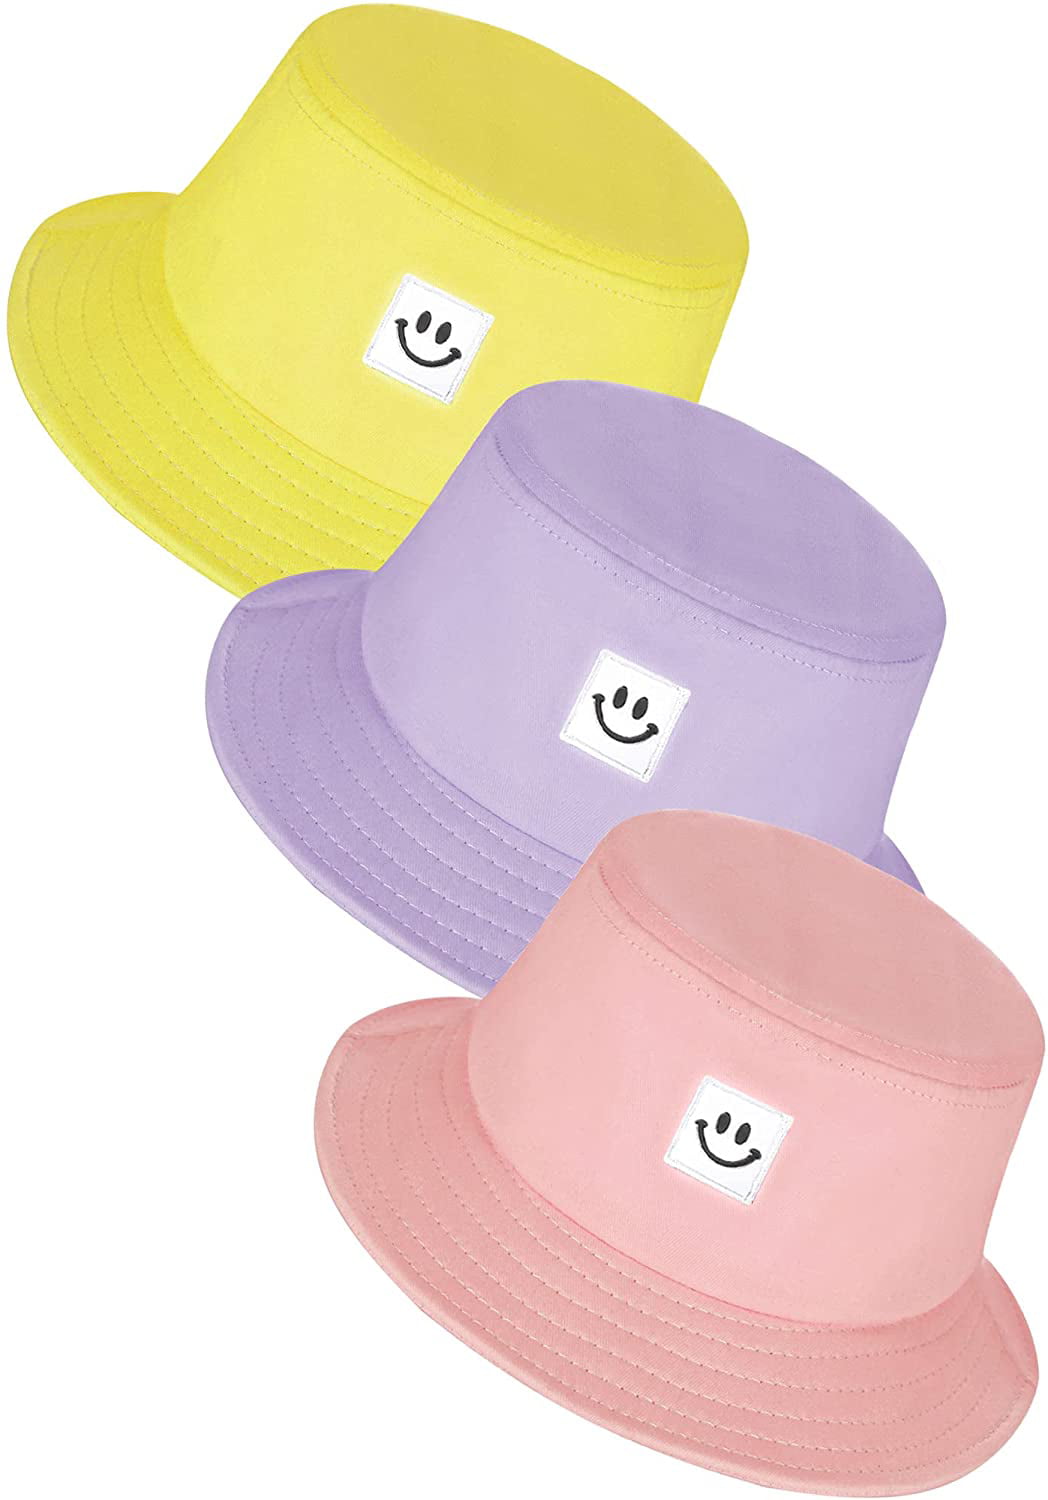 3 Pieces Kids Smile Face Bucket Hats Summer Travel Bucket Sun Beach Hats Outdoor Visor Cap for Boys Girls 